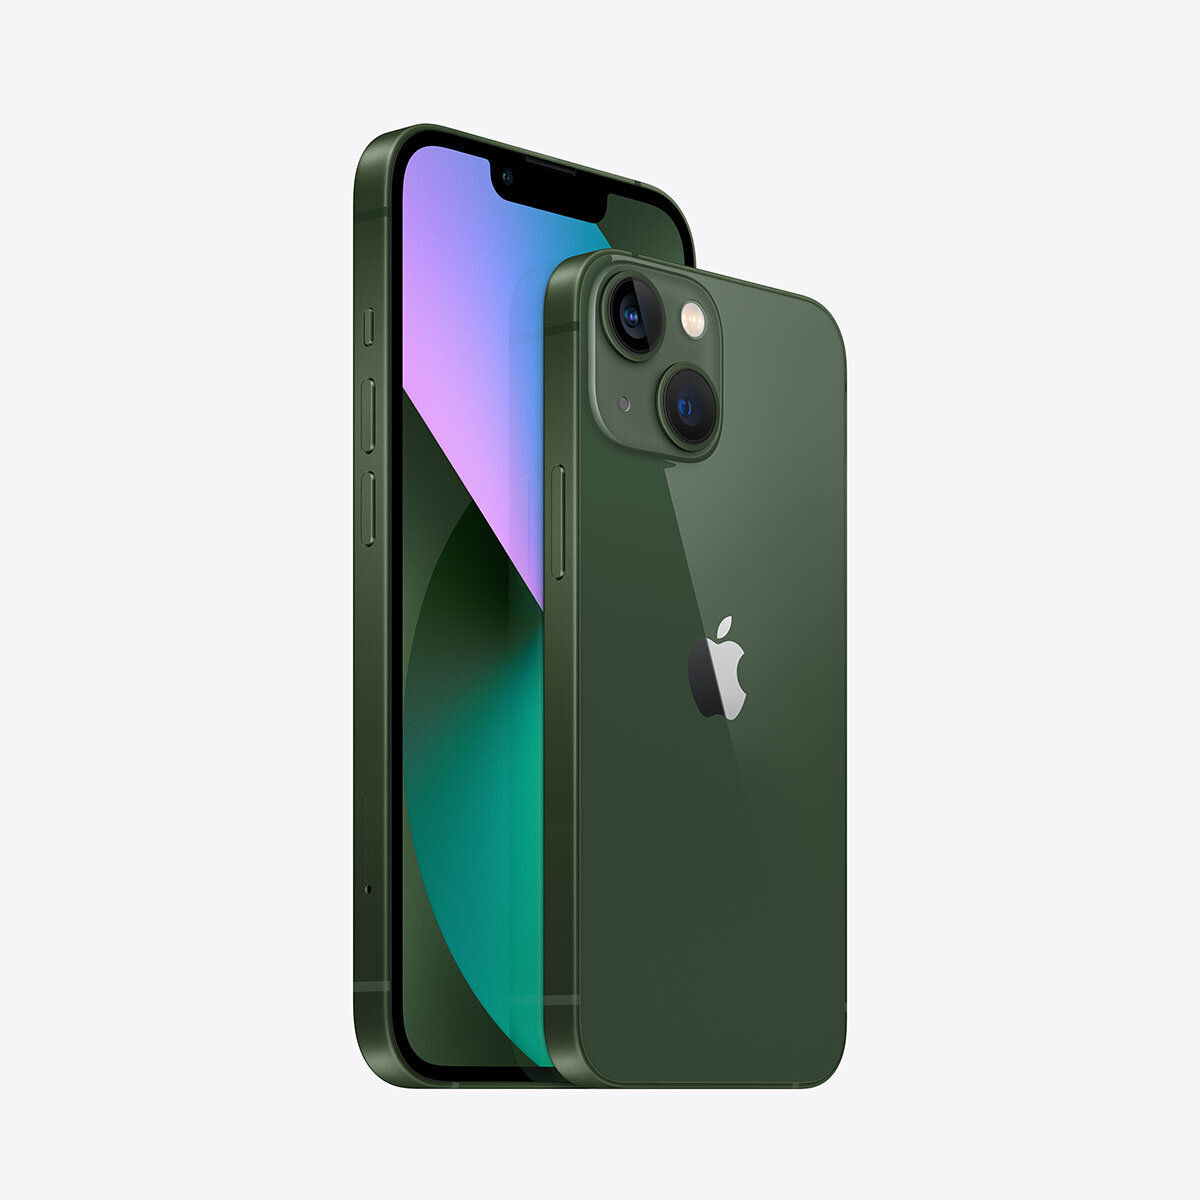 Buy Apple iPhone 13 256GB Sim Free Mobile Phone in Green, MNGL3B/A at costco.uk